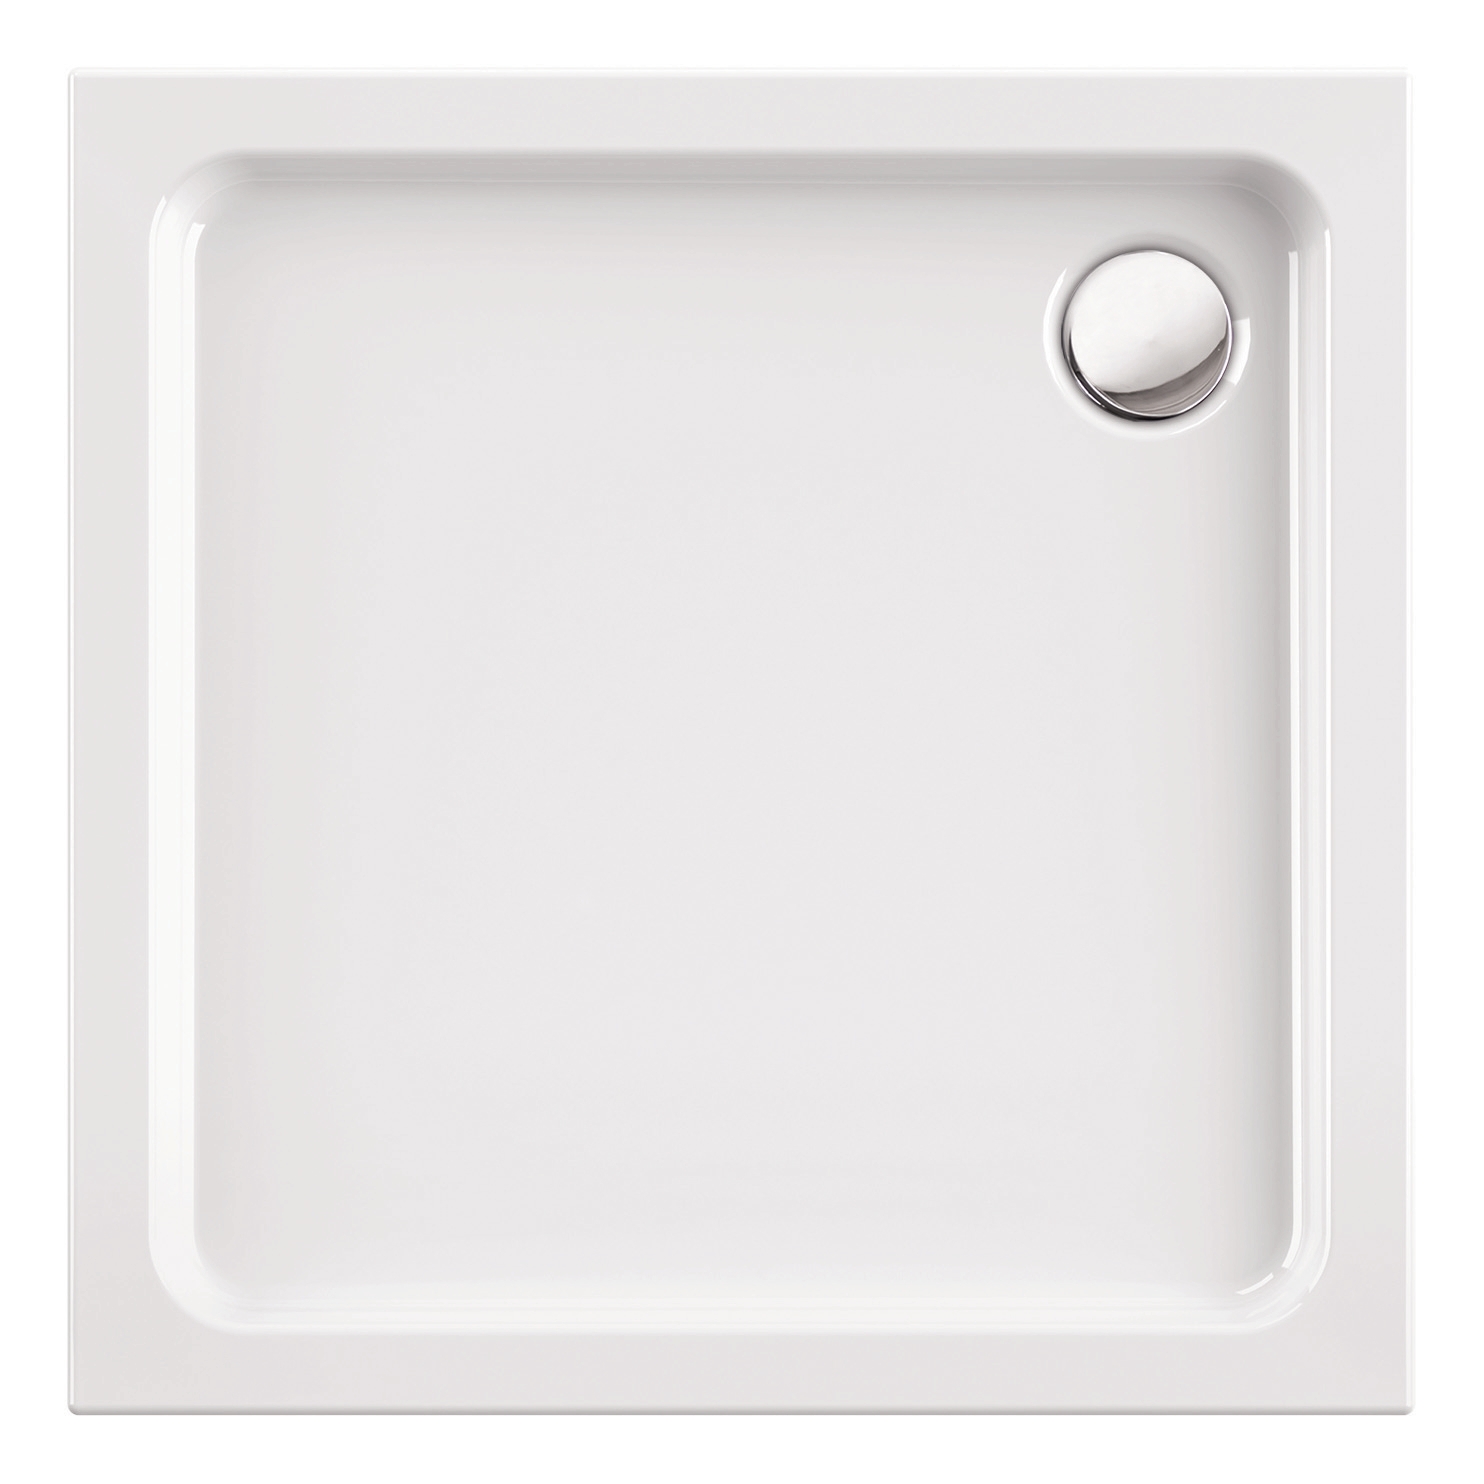 'aquaSu® Quadrat-Brausewanne soNo in Weiß, 80 x 80 x 6,5 cm